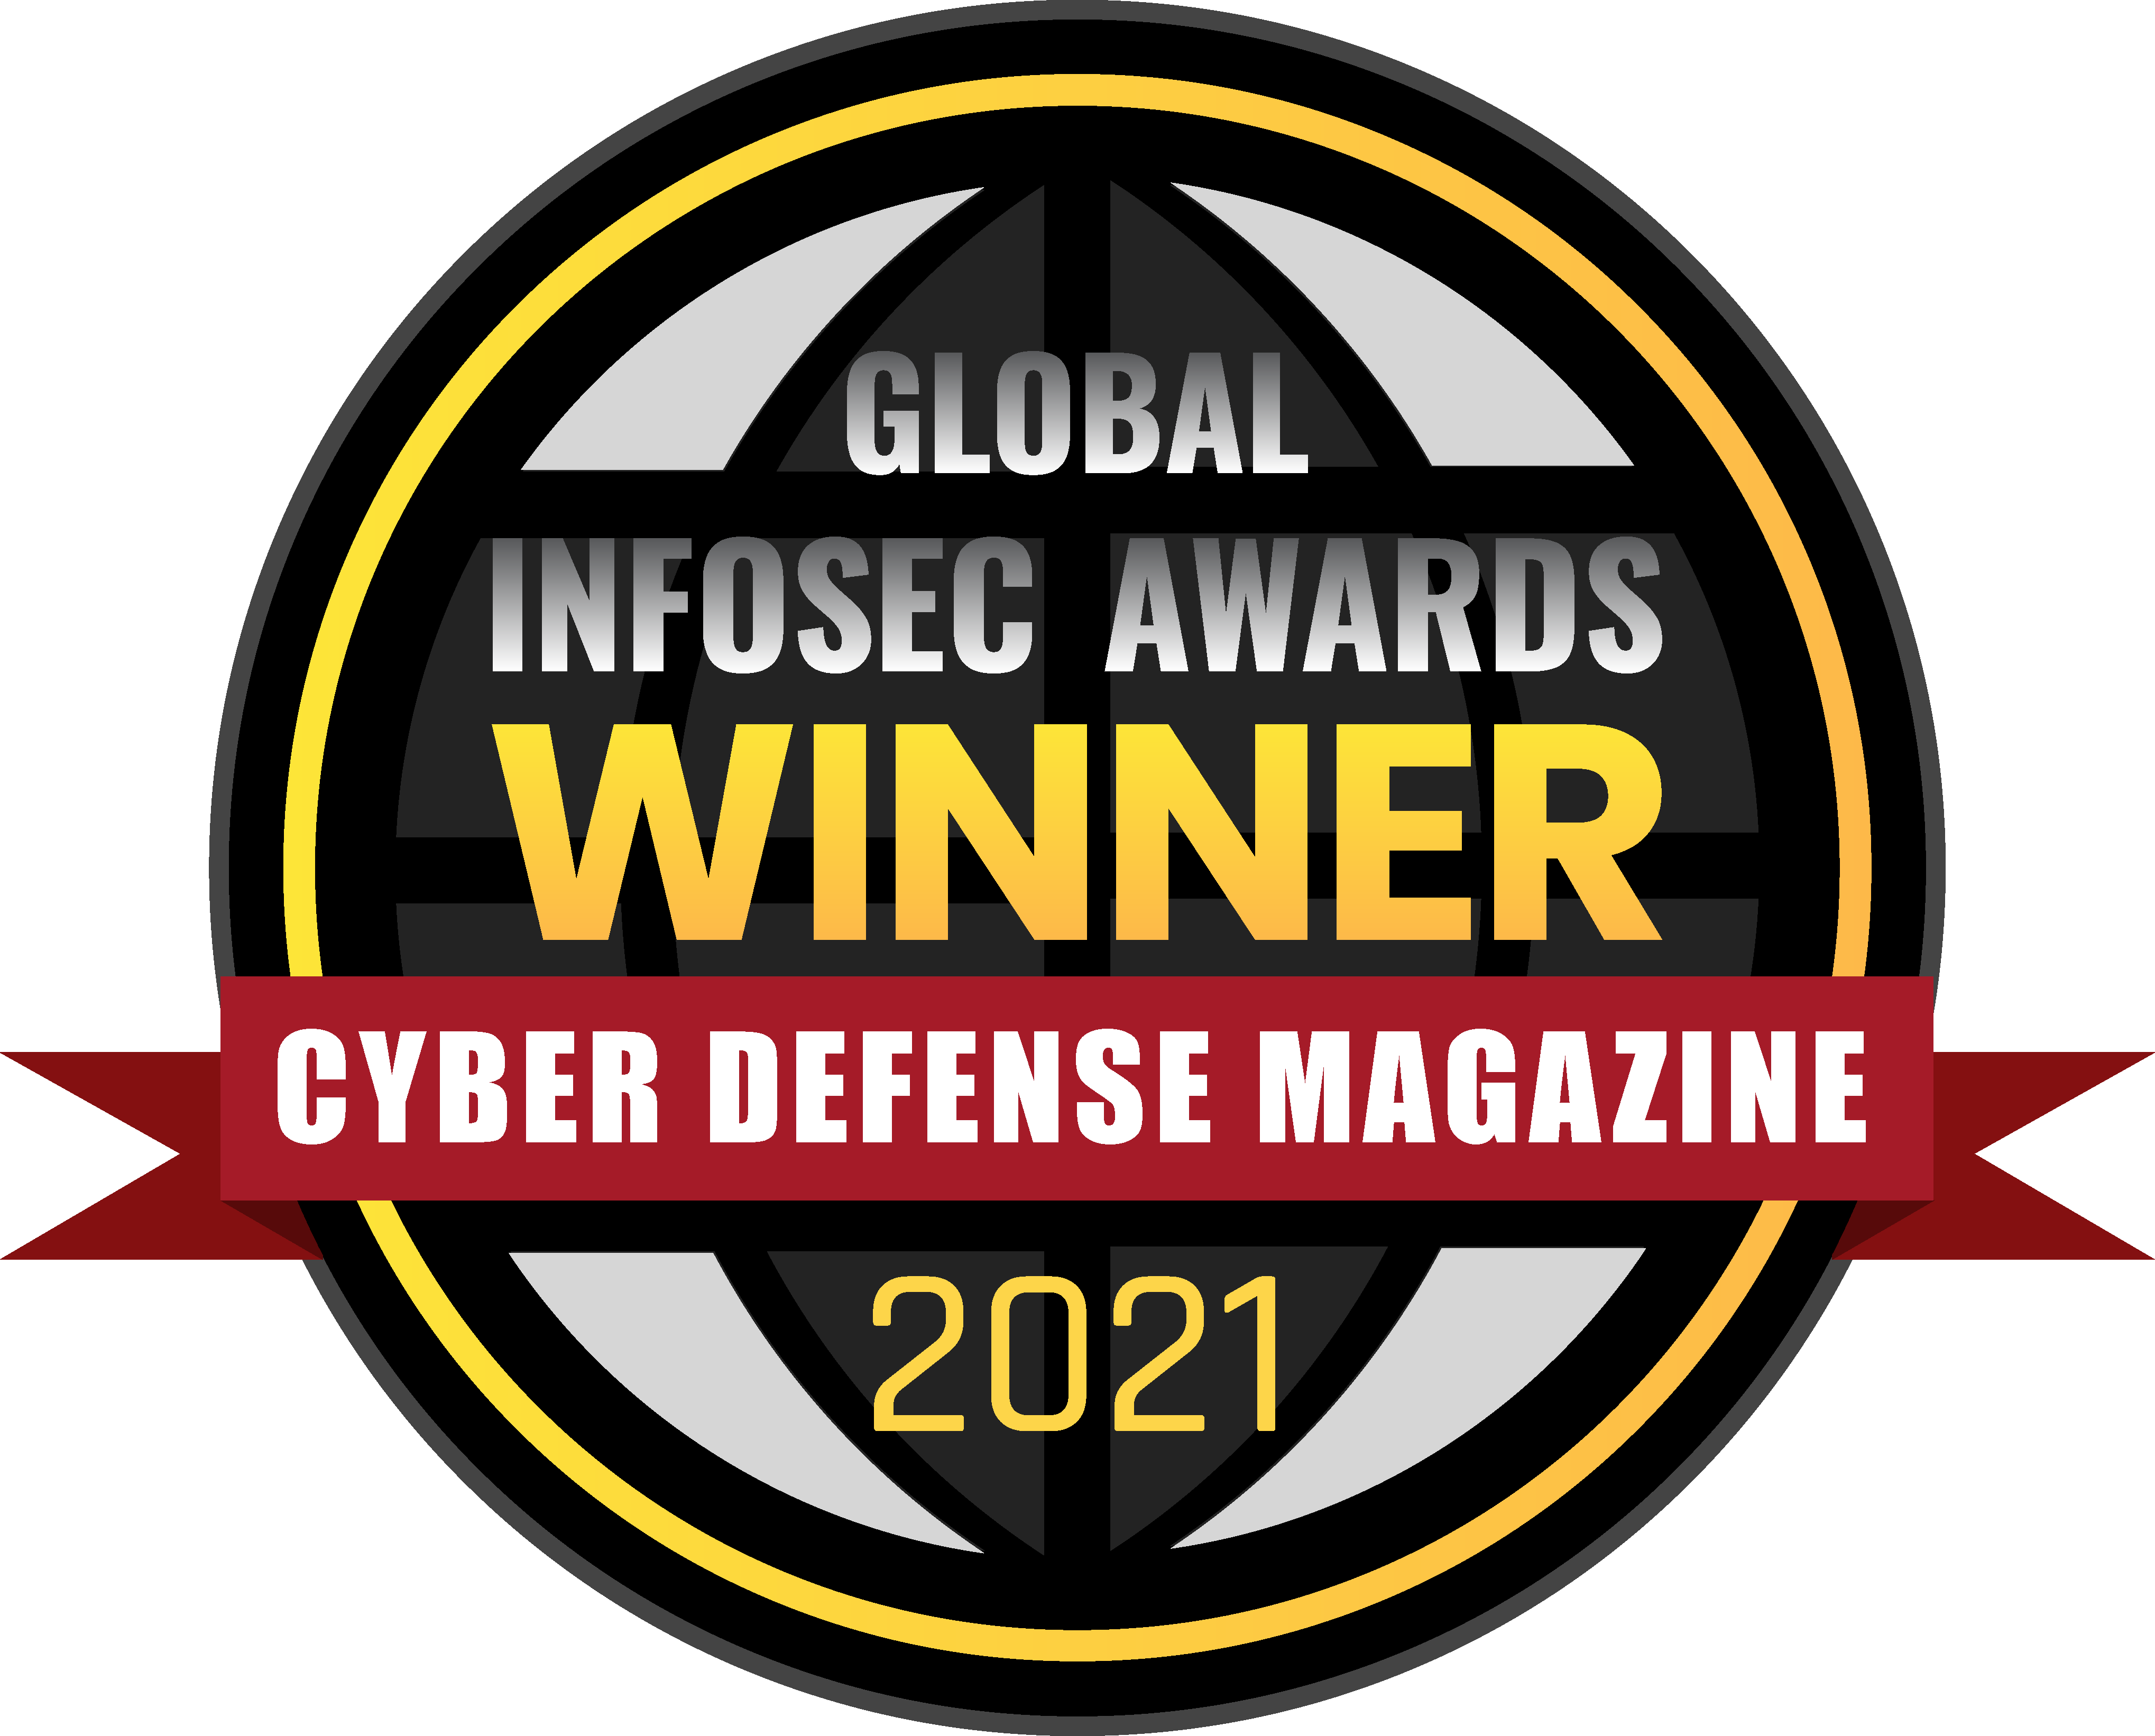 2021 Global Infosec Awards - Cyber Defense Magazine